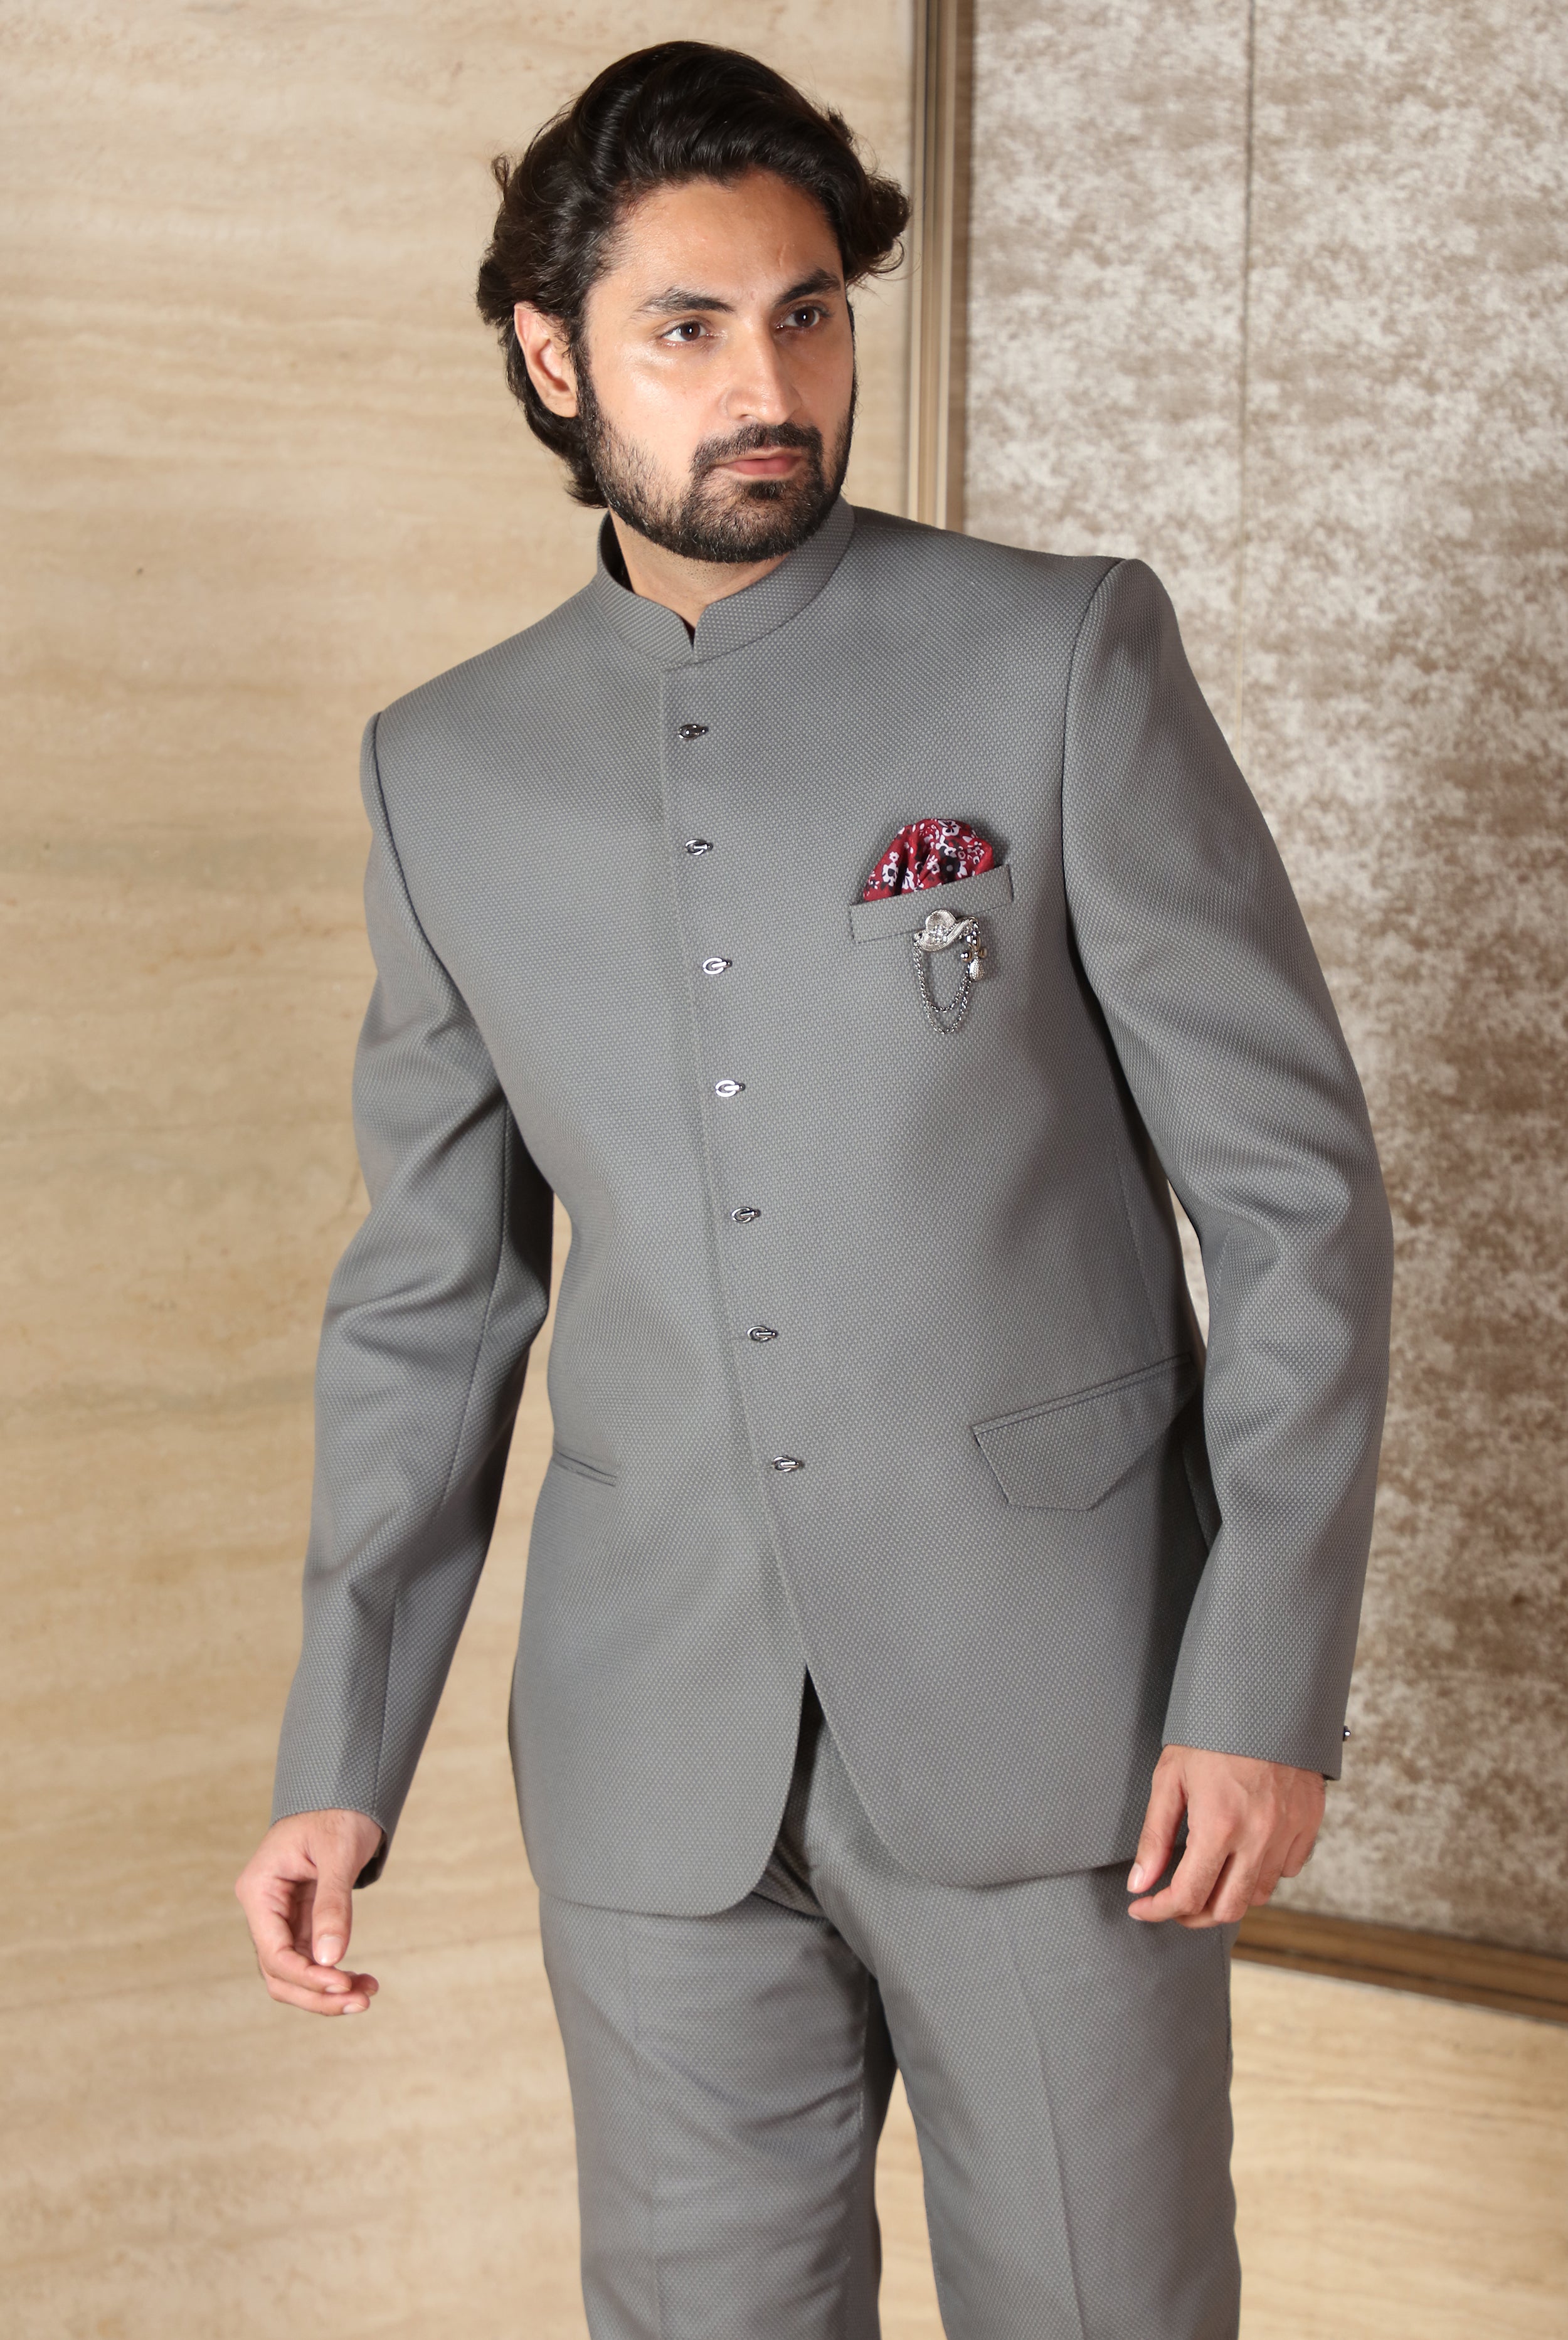 Merino Cream Geometric Thread And Sequin Embroidered Textured Premium  Polyester Bandhgala/Jodhpuri Blazers for Men.